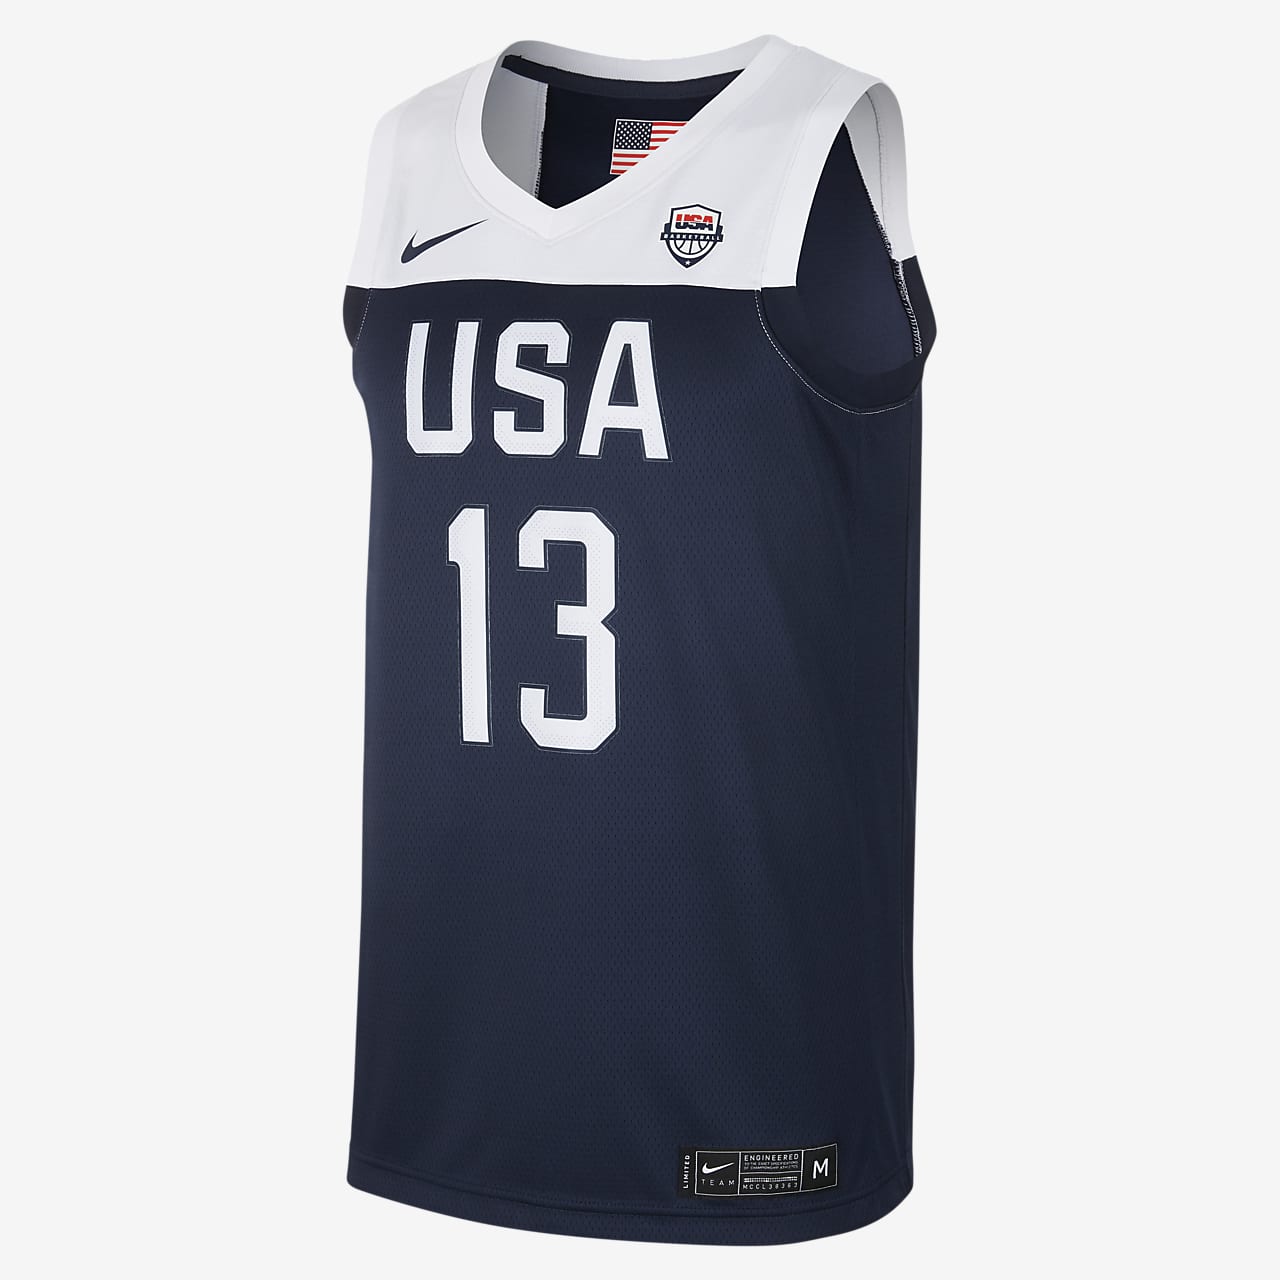 USA Nike (Road) Men's Basketball Jersey